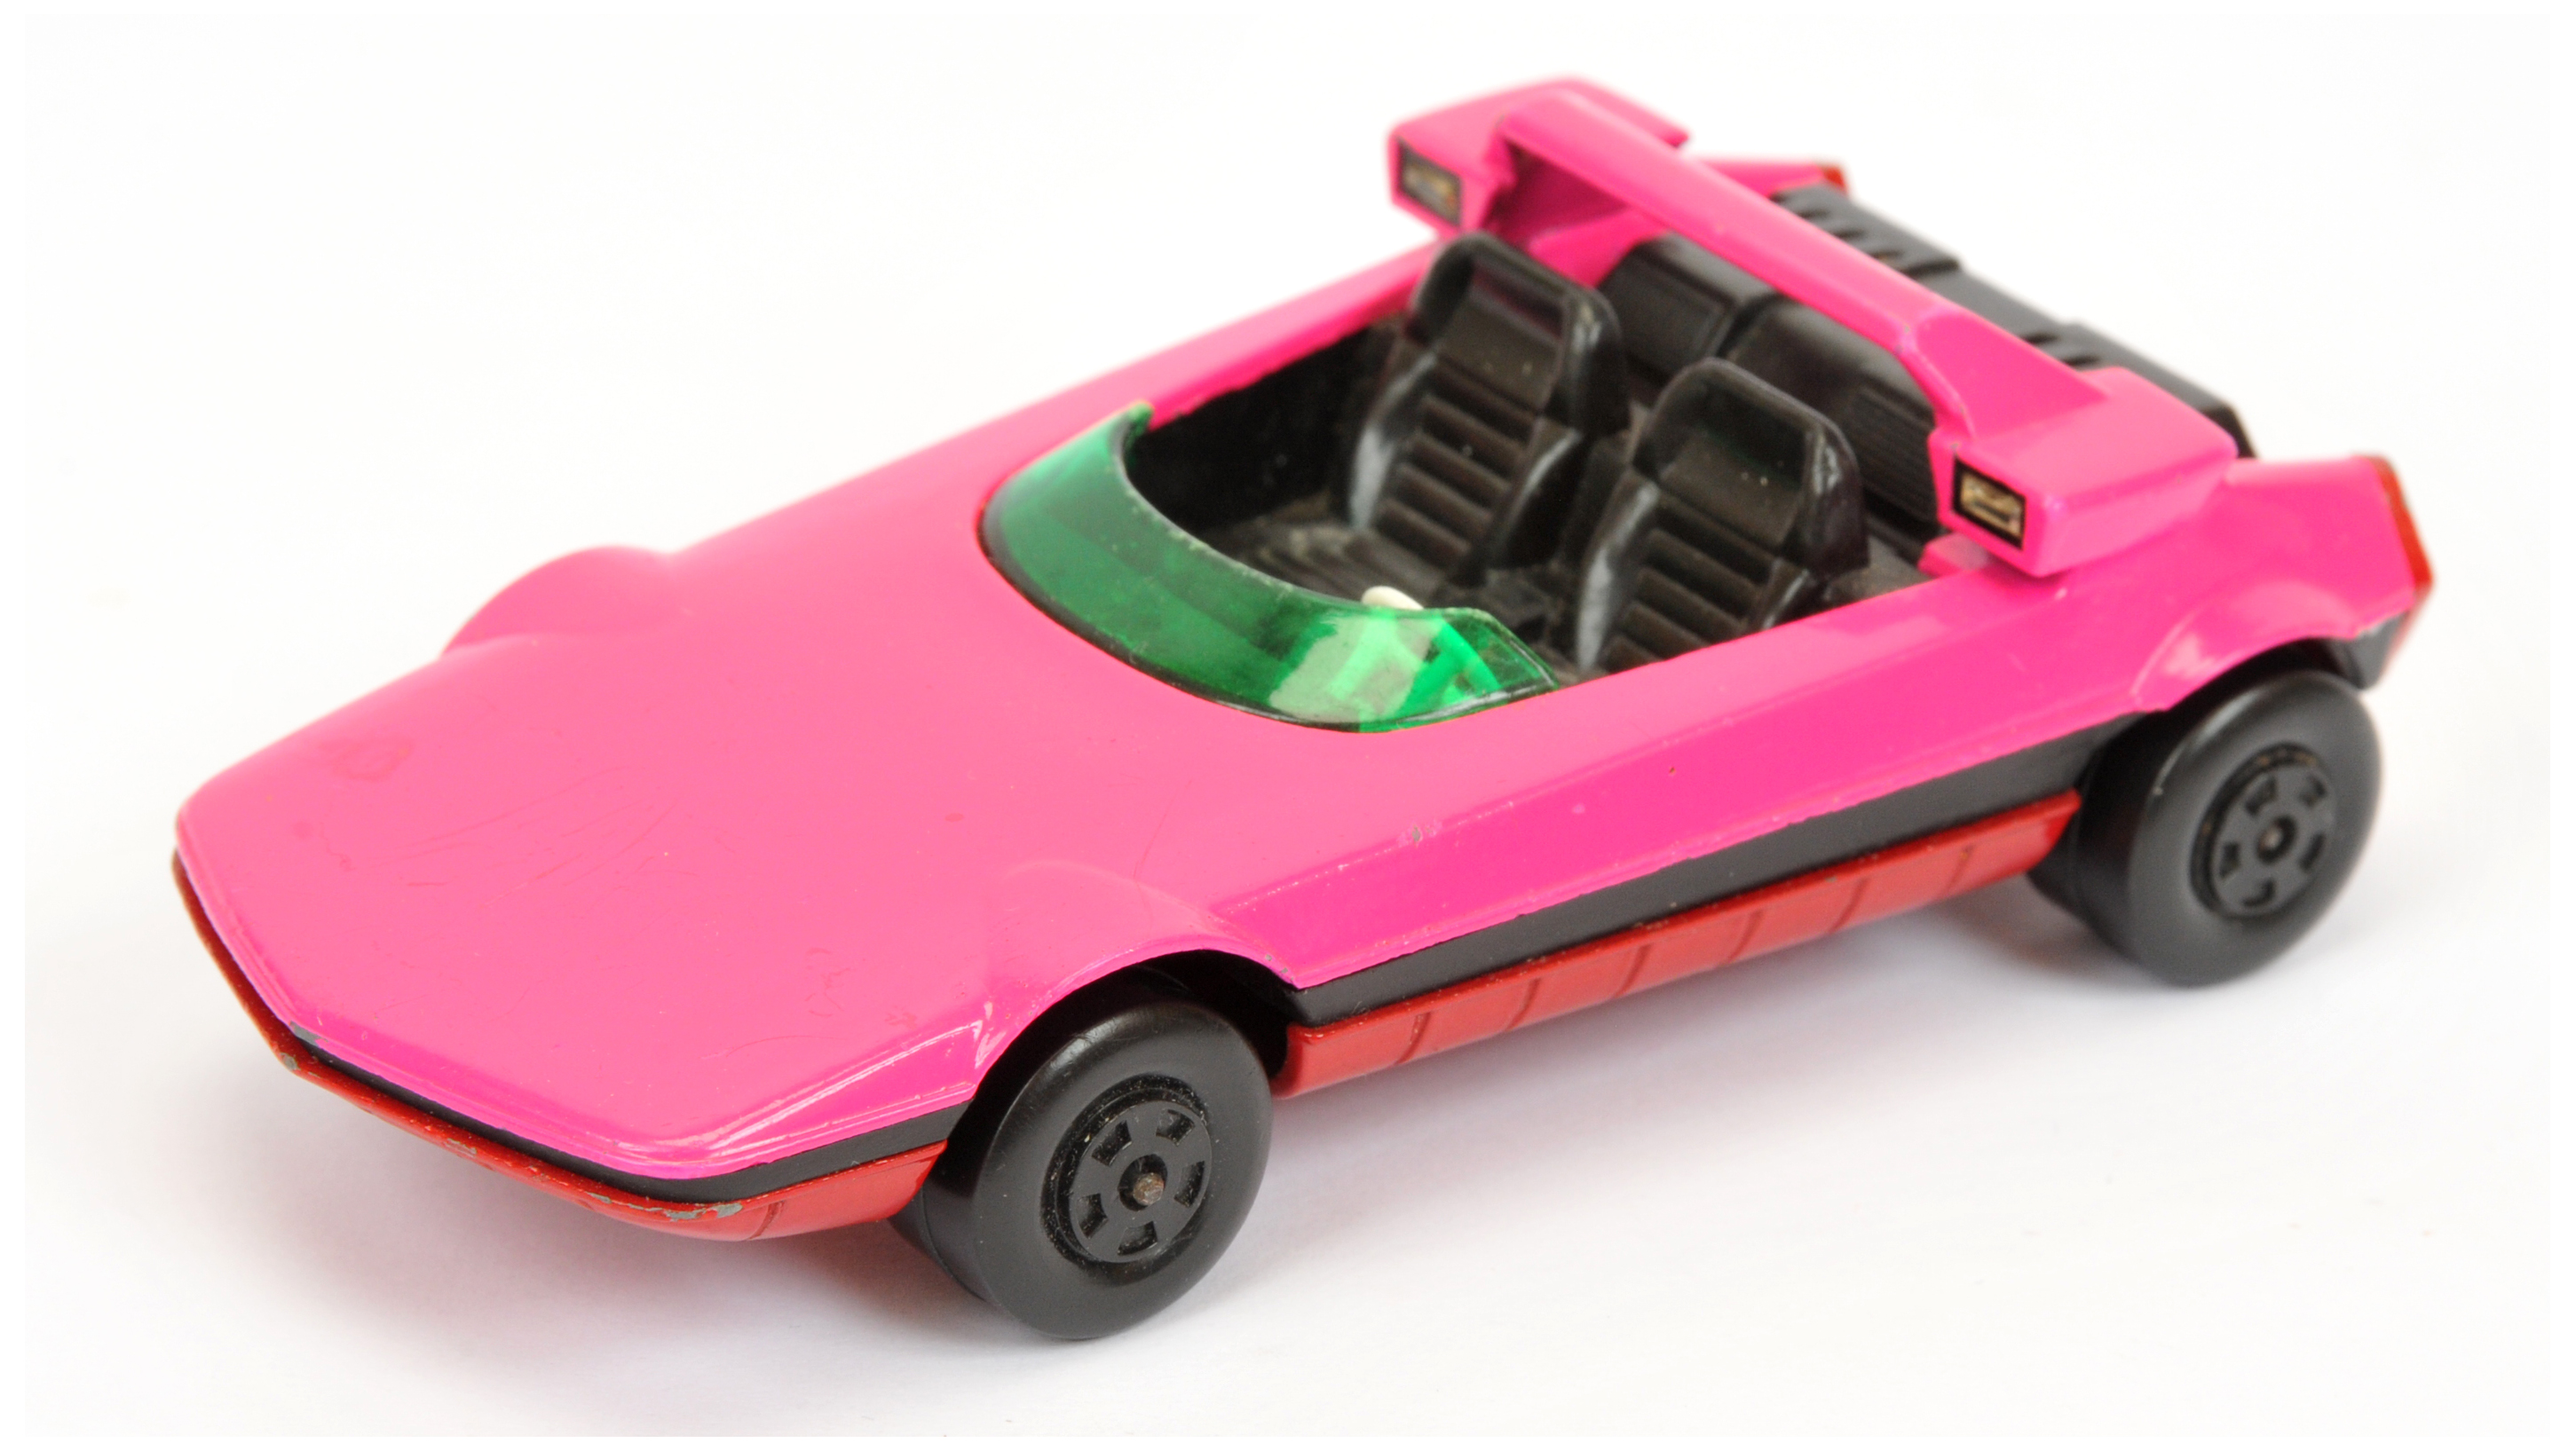 Matchbox Speed Kings K31 Bertone Runabout factory trial model - Hot pink body, dark green windscr...